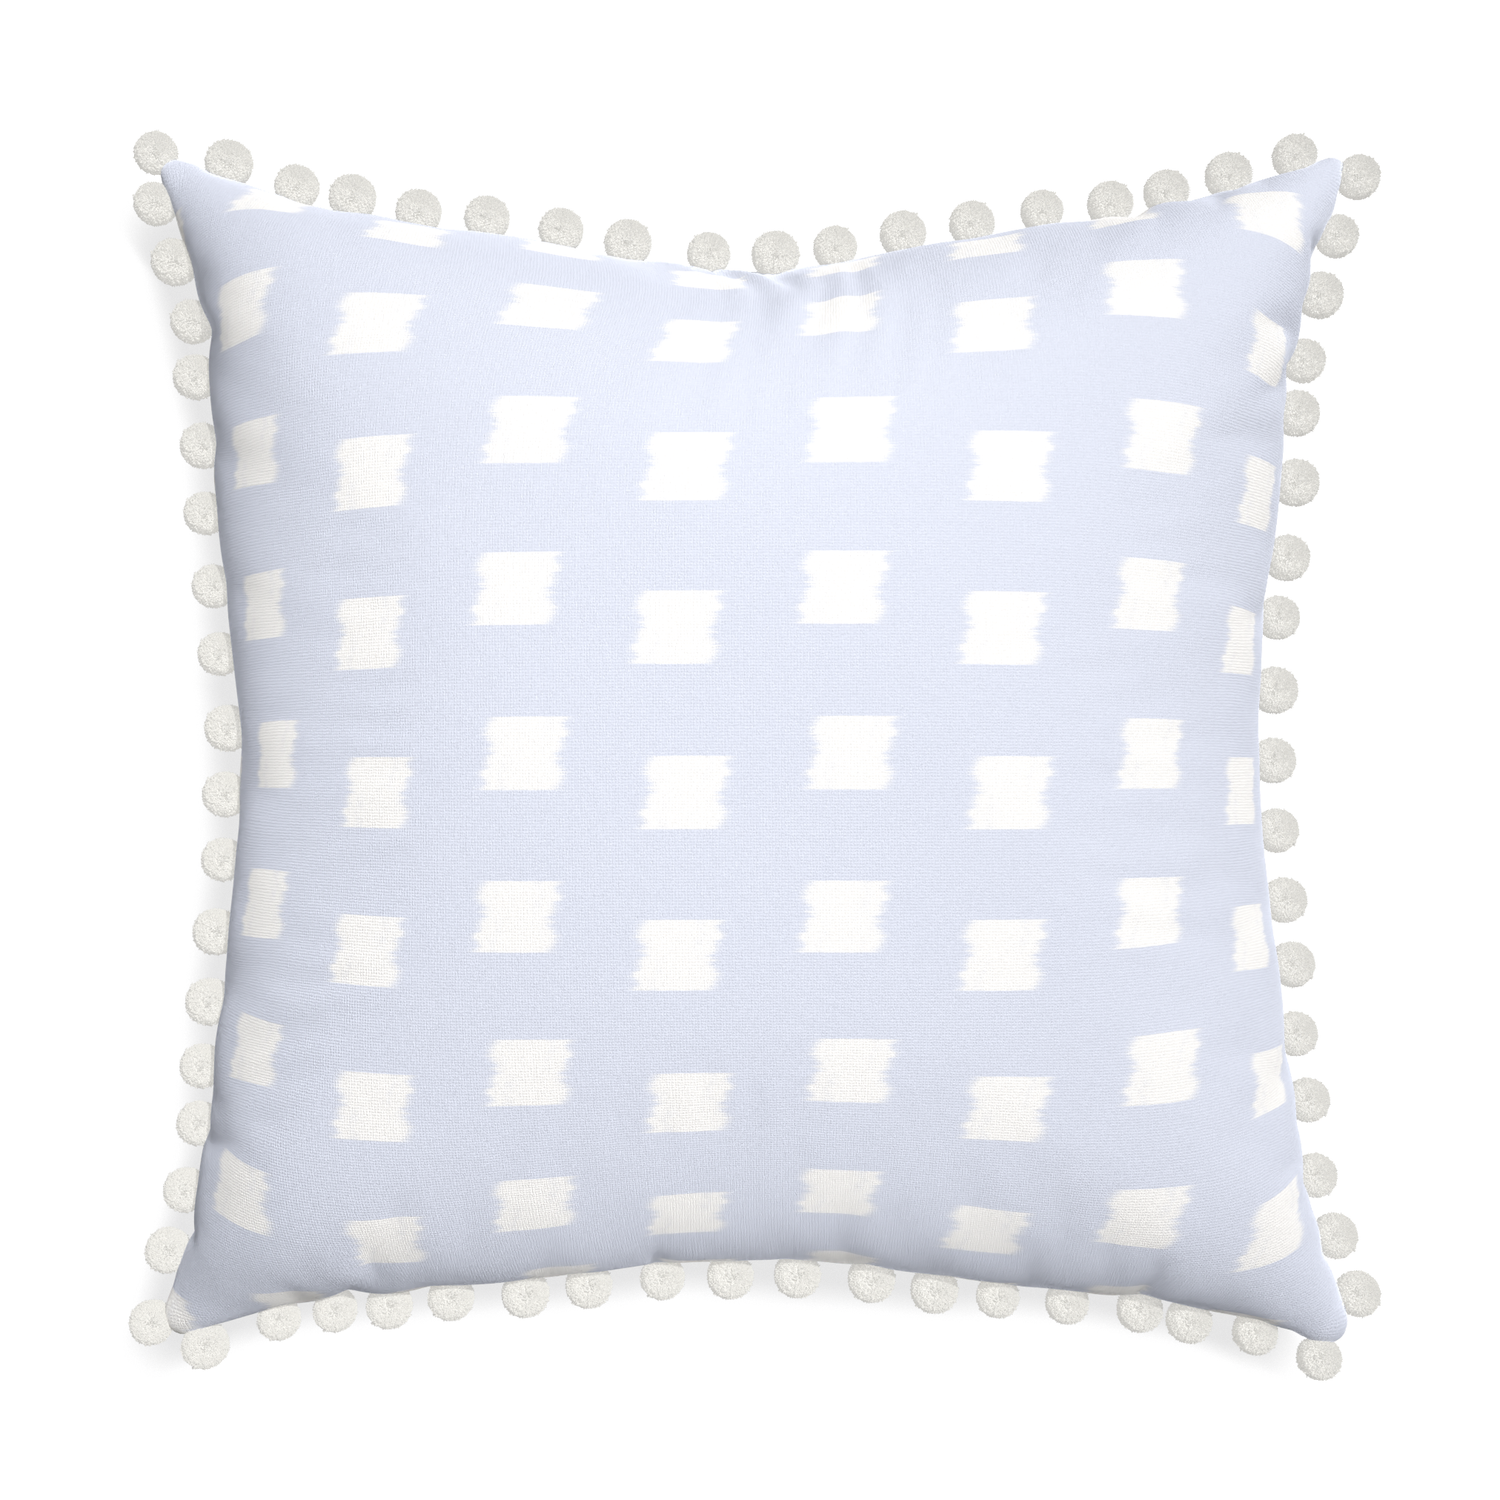 Euro-sham denton custom pillow with snow pom pom on white background